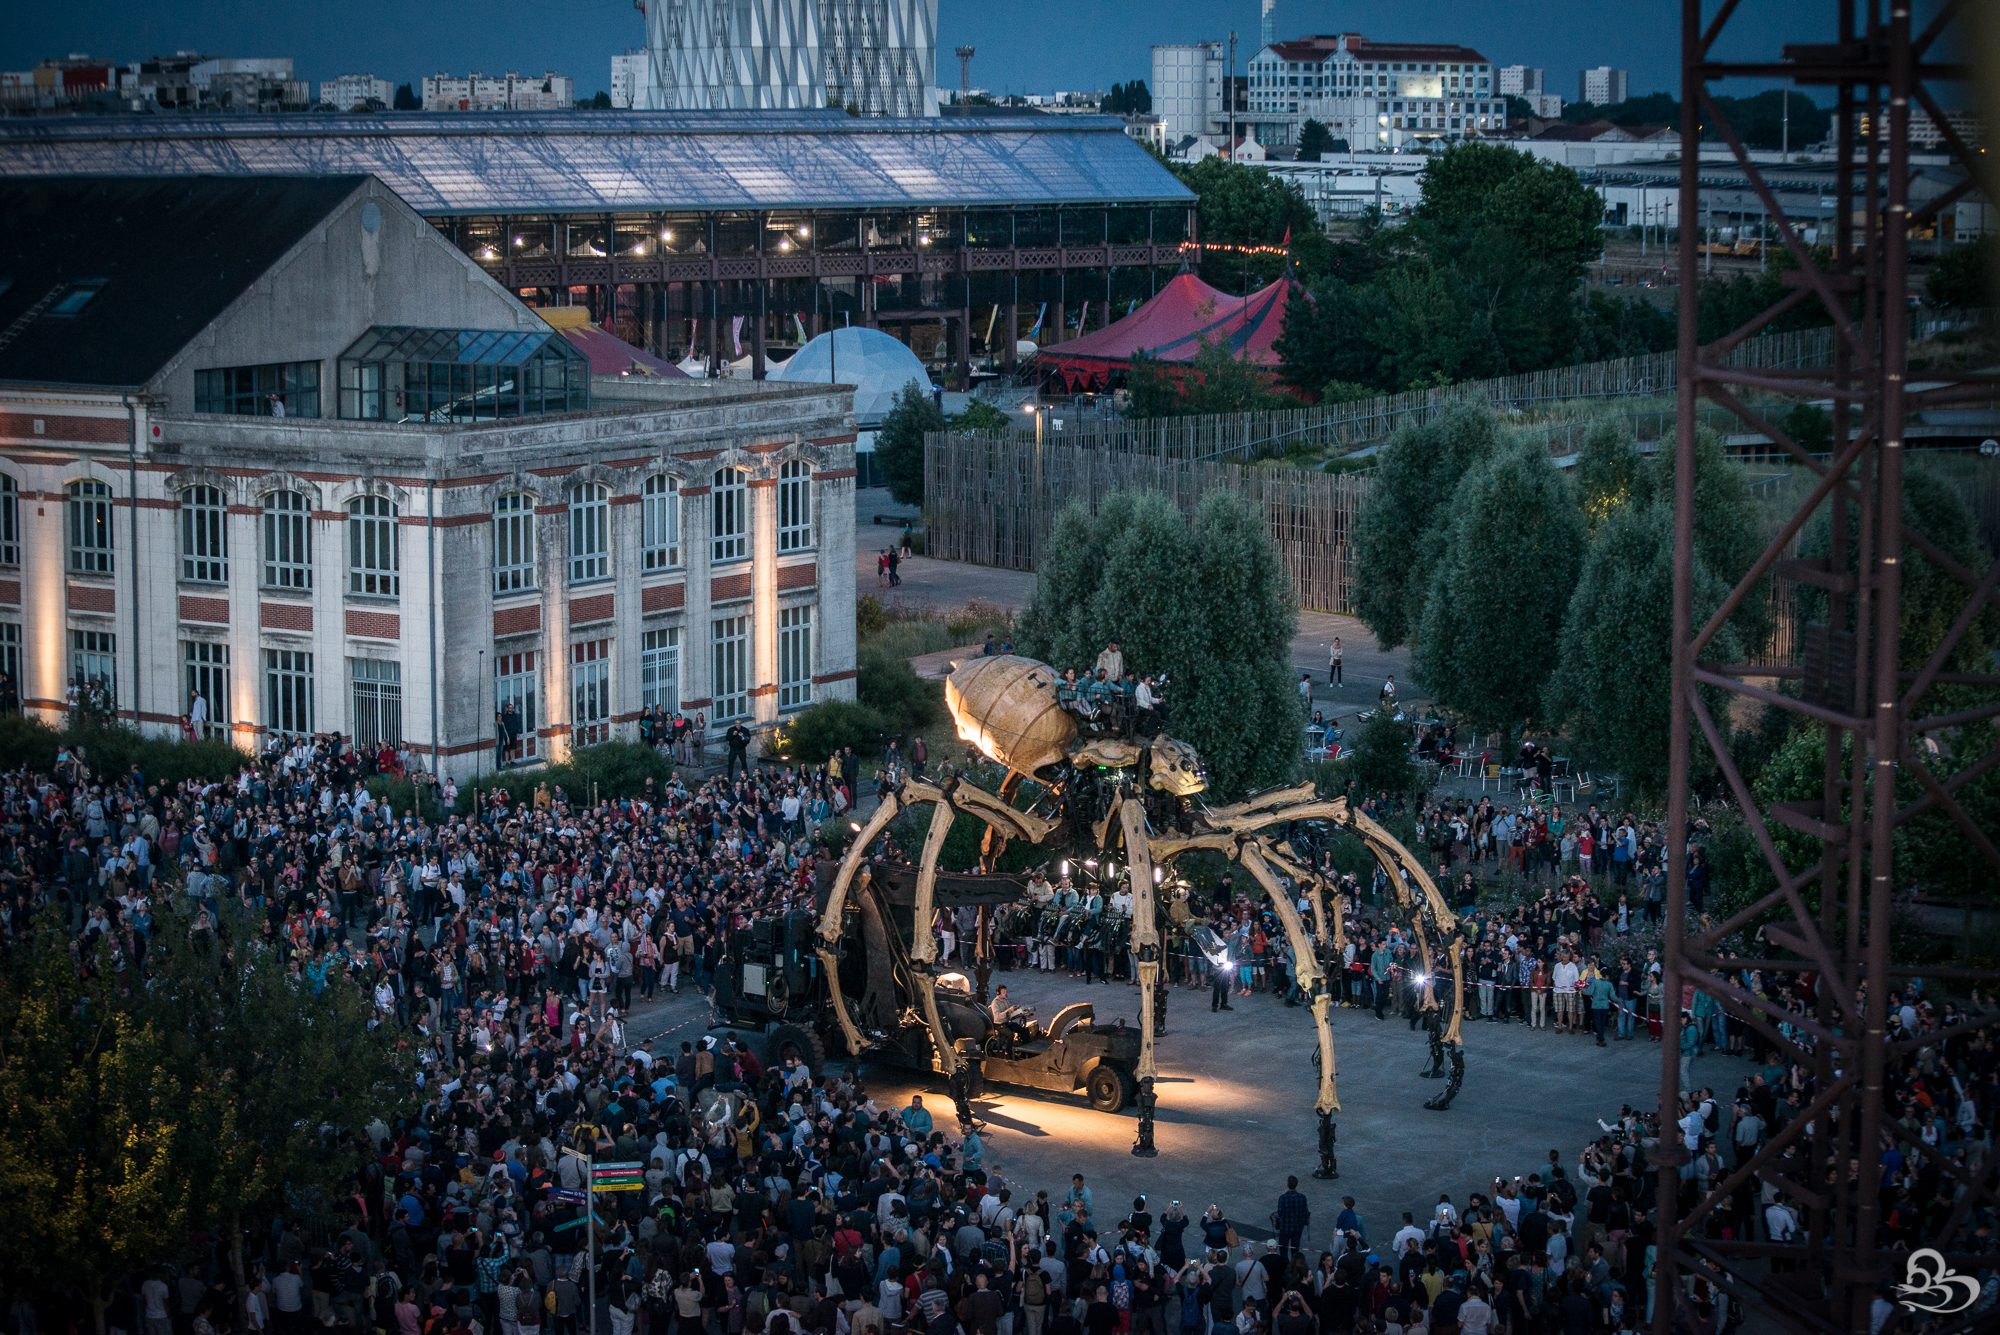 Spider at Night on the Isle of Nantes. (Photo by Gilles Bonugli Kali)